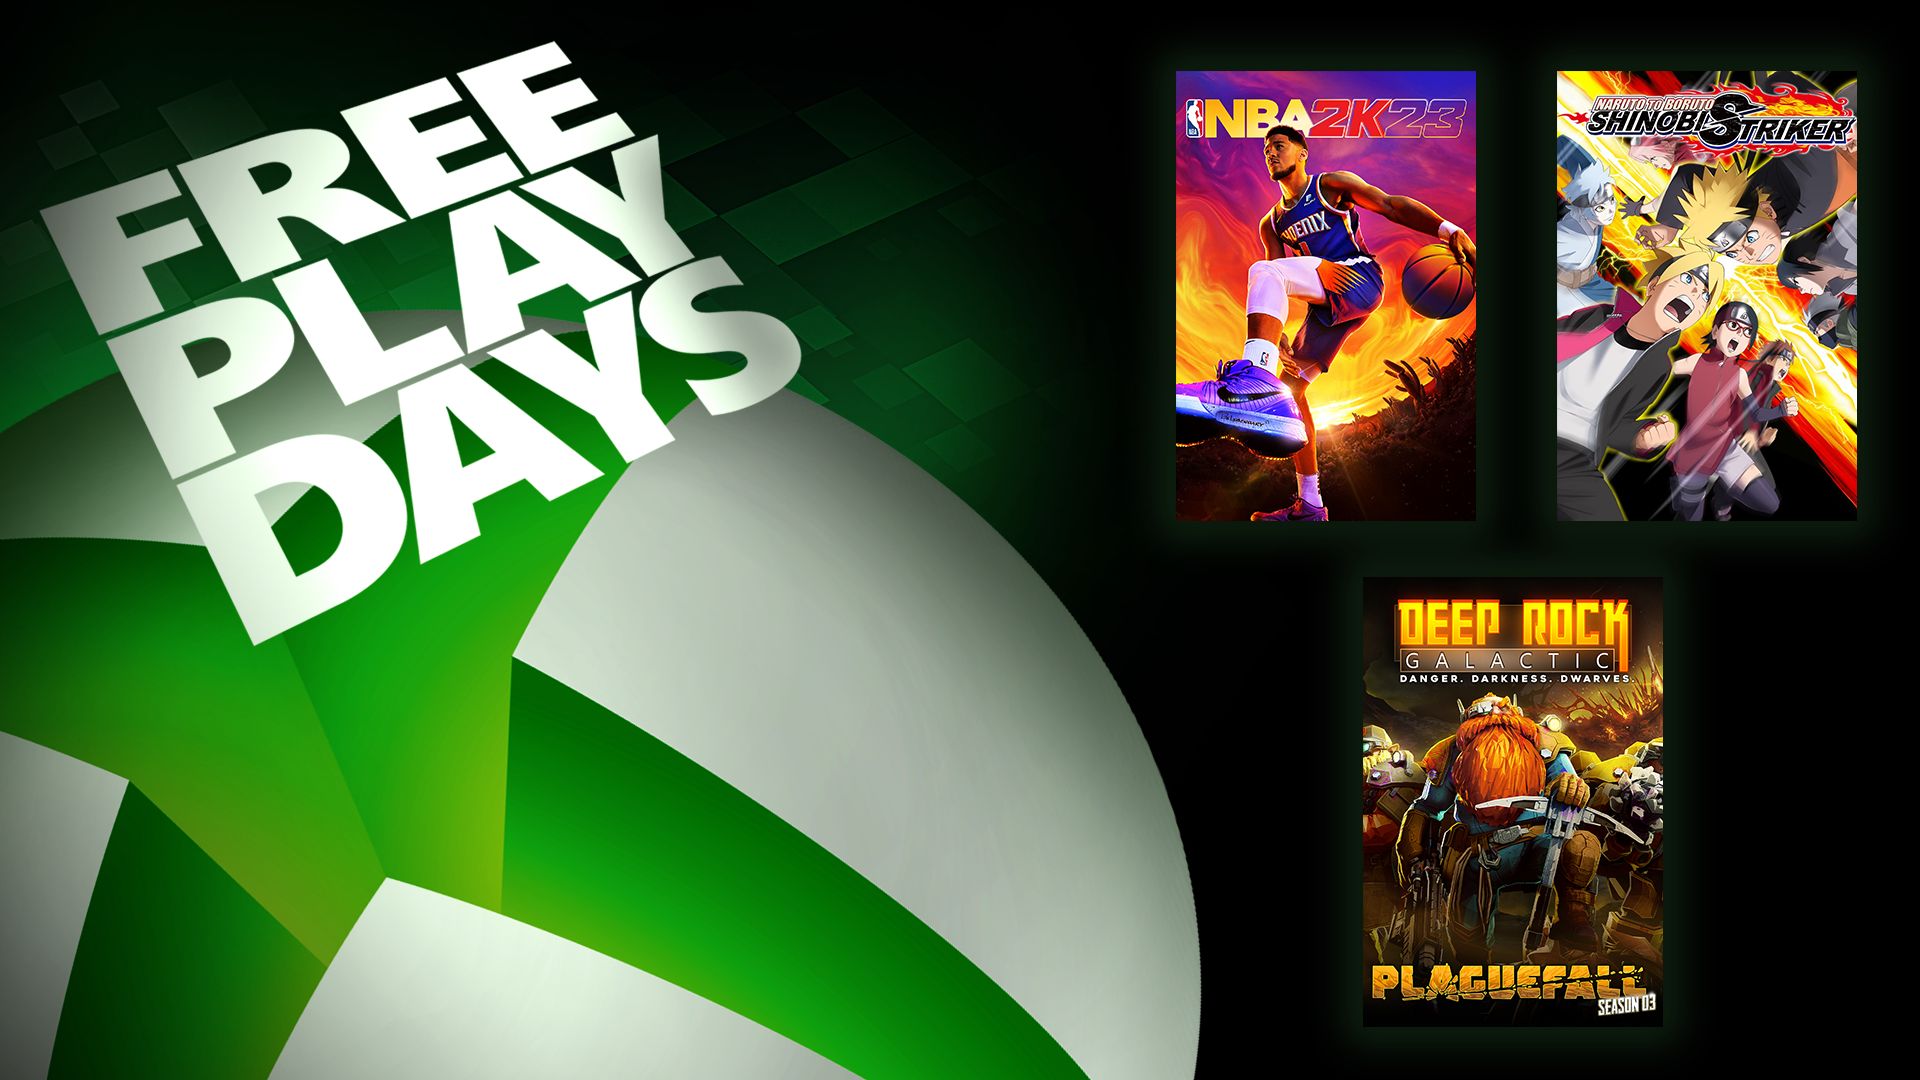 Free Play Days - November 17